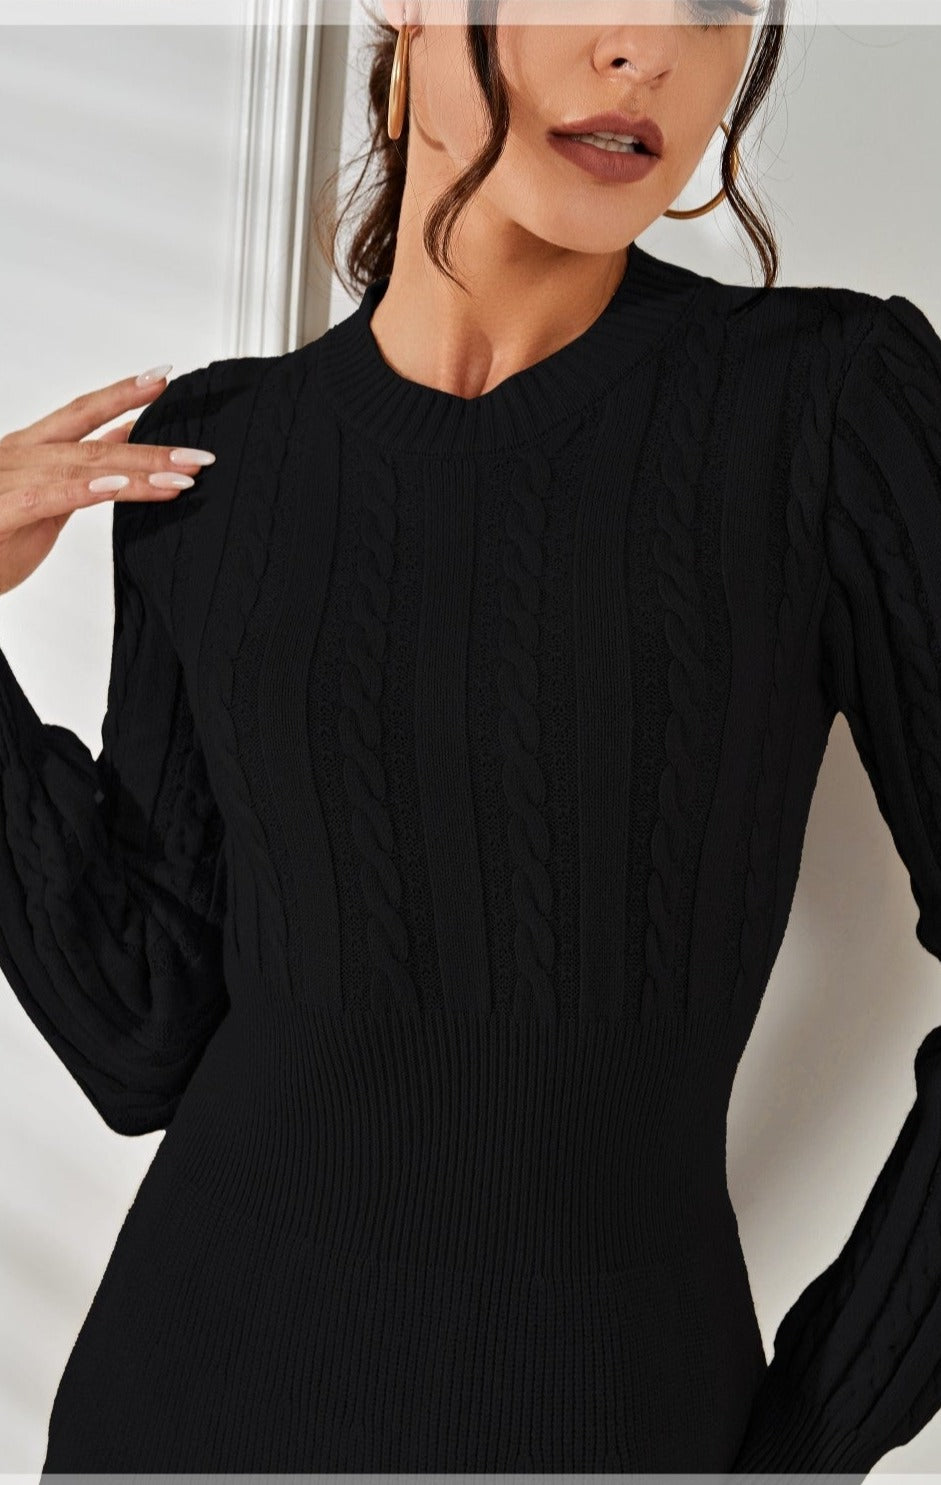 Isarra Knit Sweater Dress - SunsetFashionLA